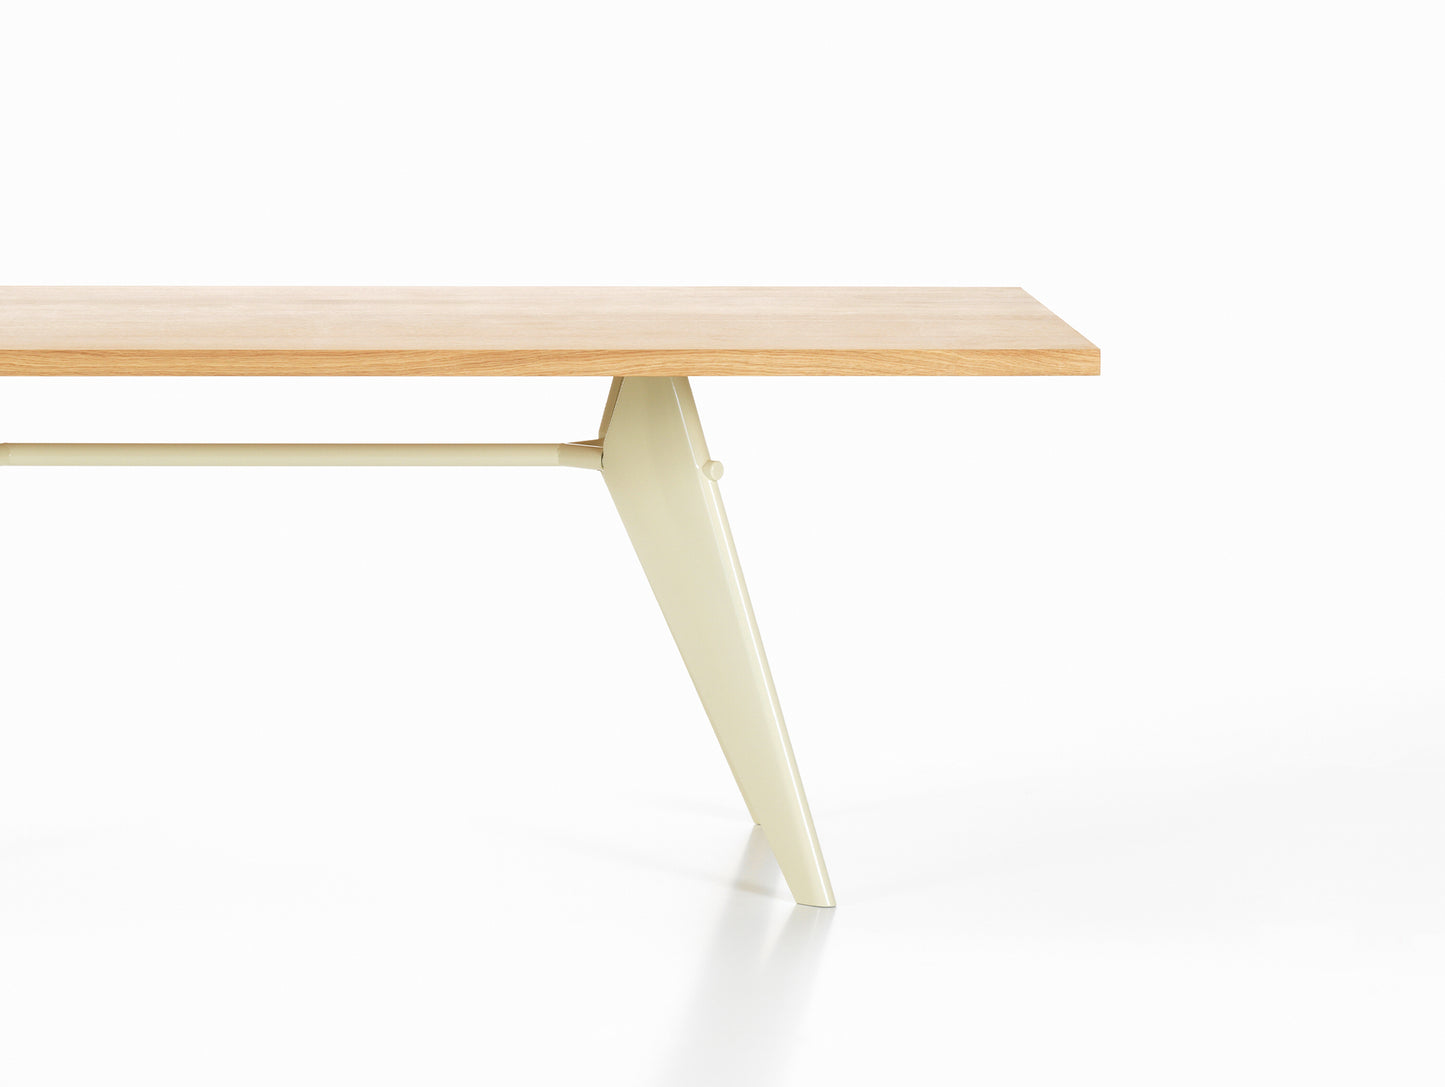 EM Table (Solid Oak Tabletop) by Vitra - Length 200 cm / Solid Oak Tabletop / Ecru Base